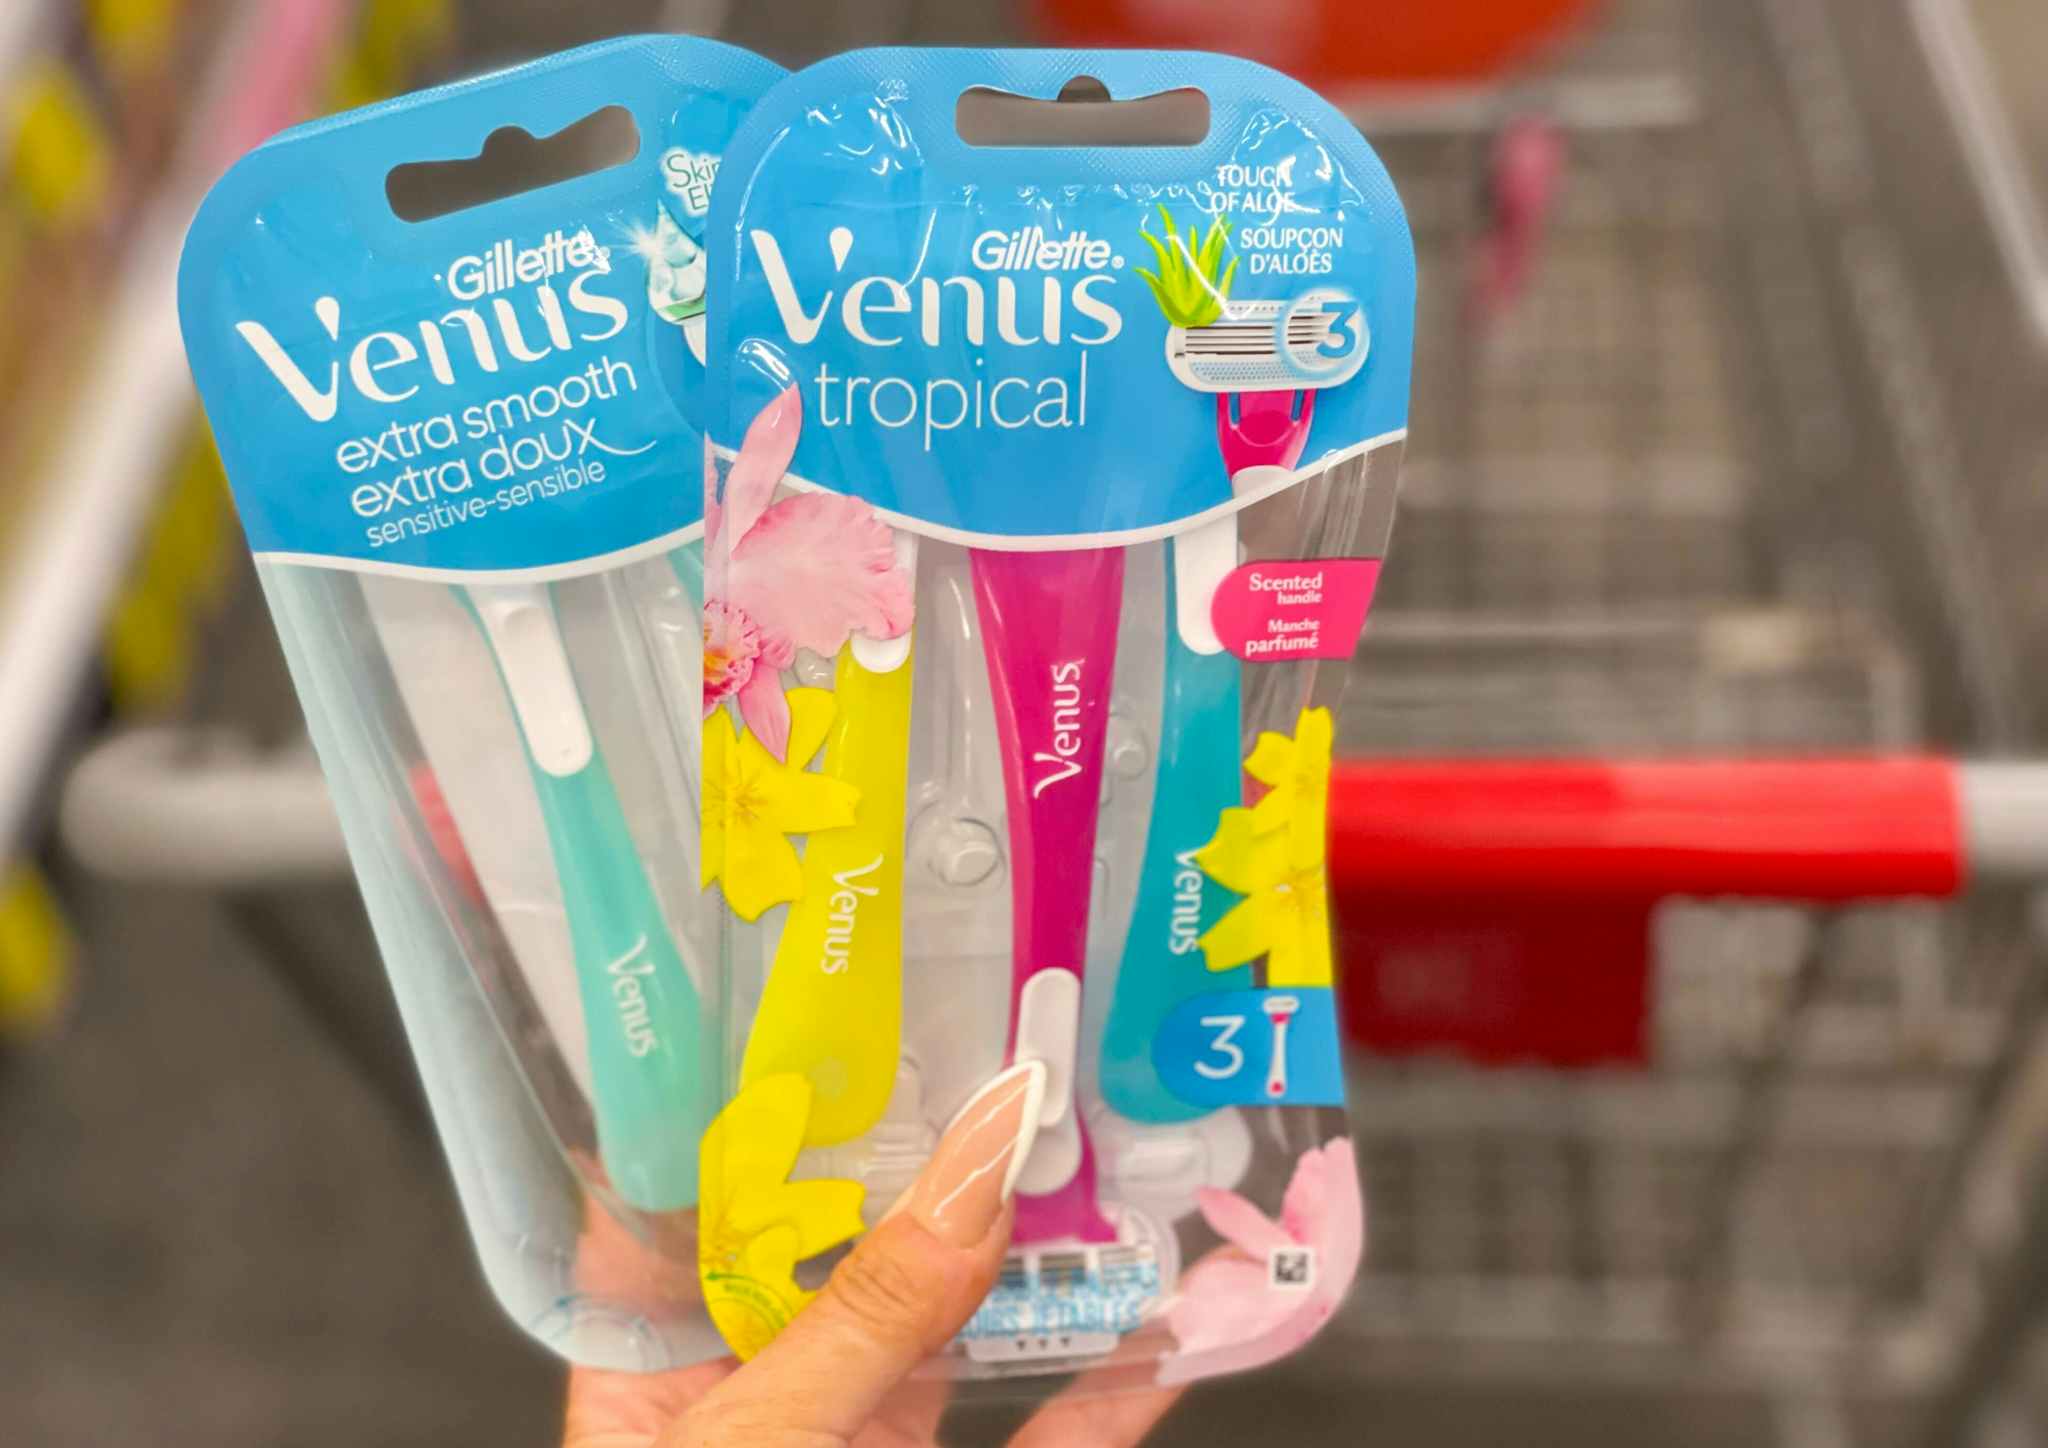 venus disposable razors held in hand